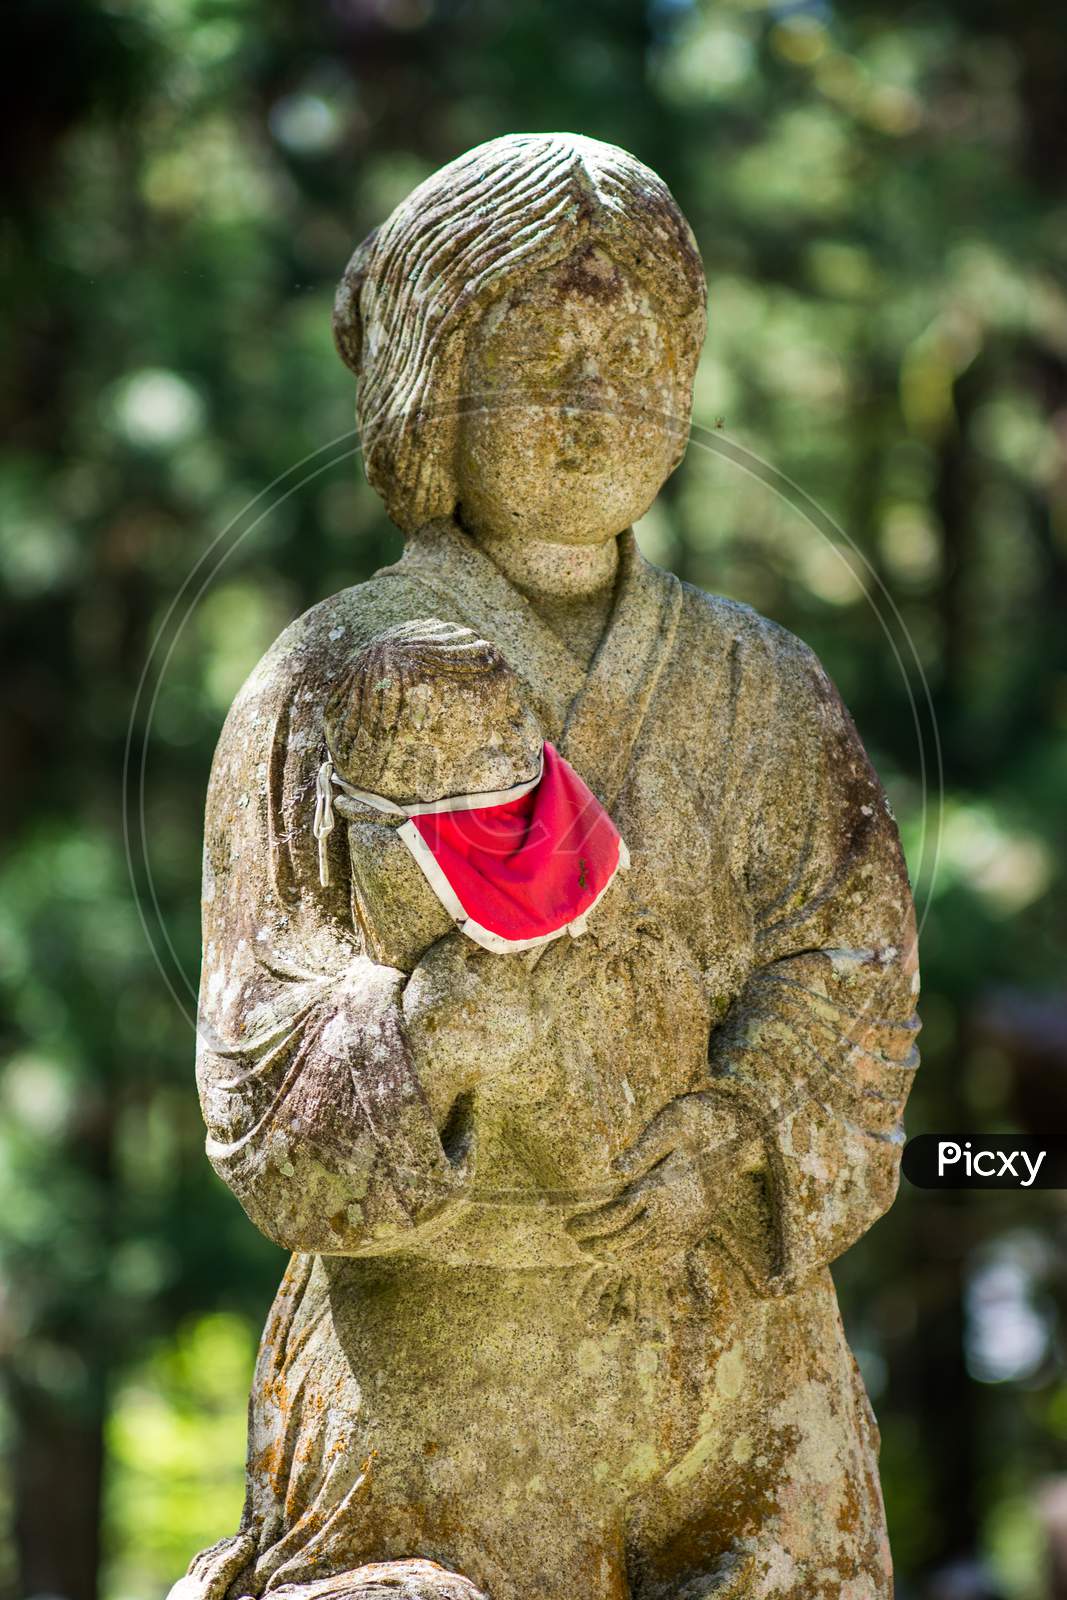 Buddhist Sculpture In The Okunoin Cemetery In Koyasan, Japan